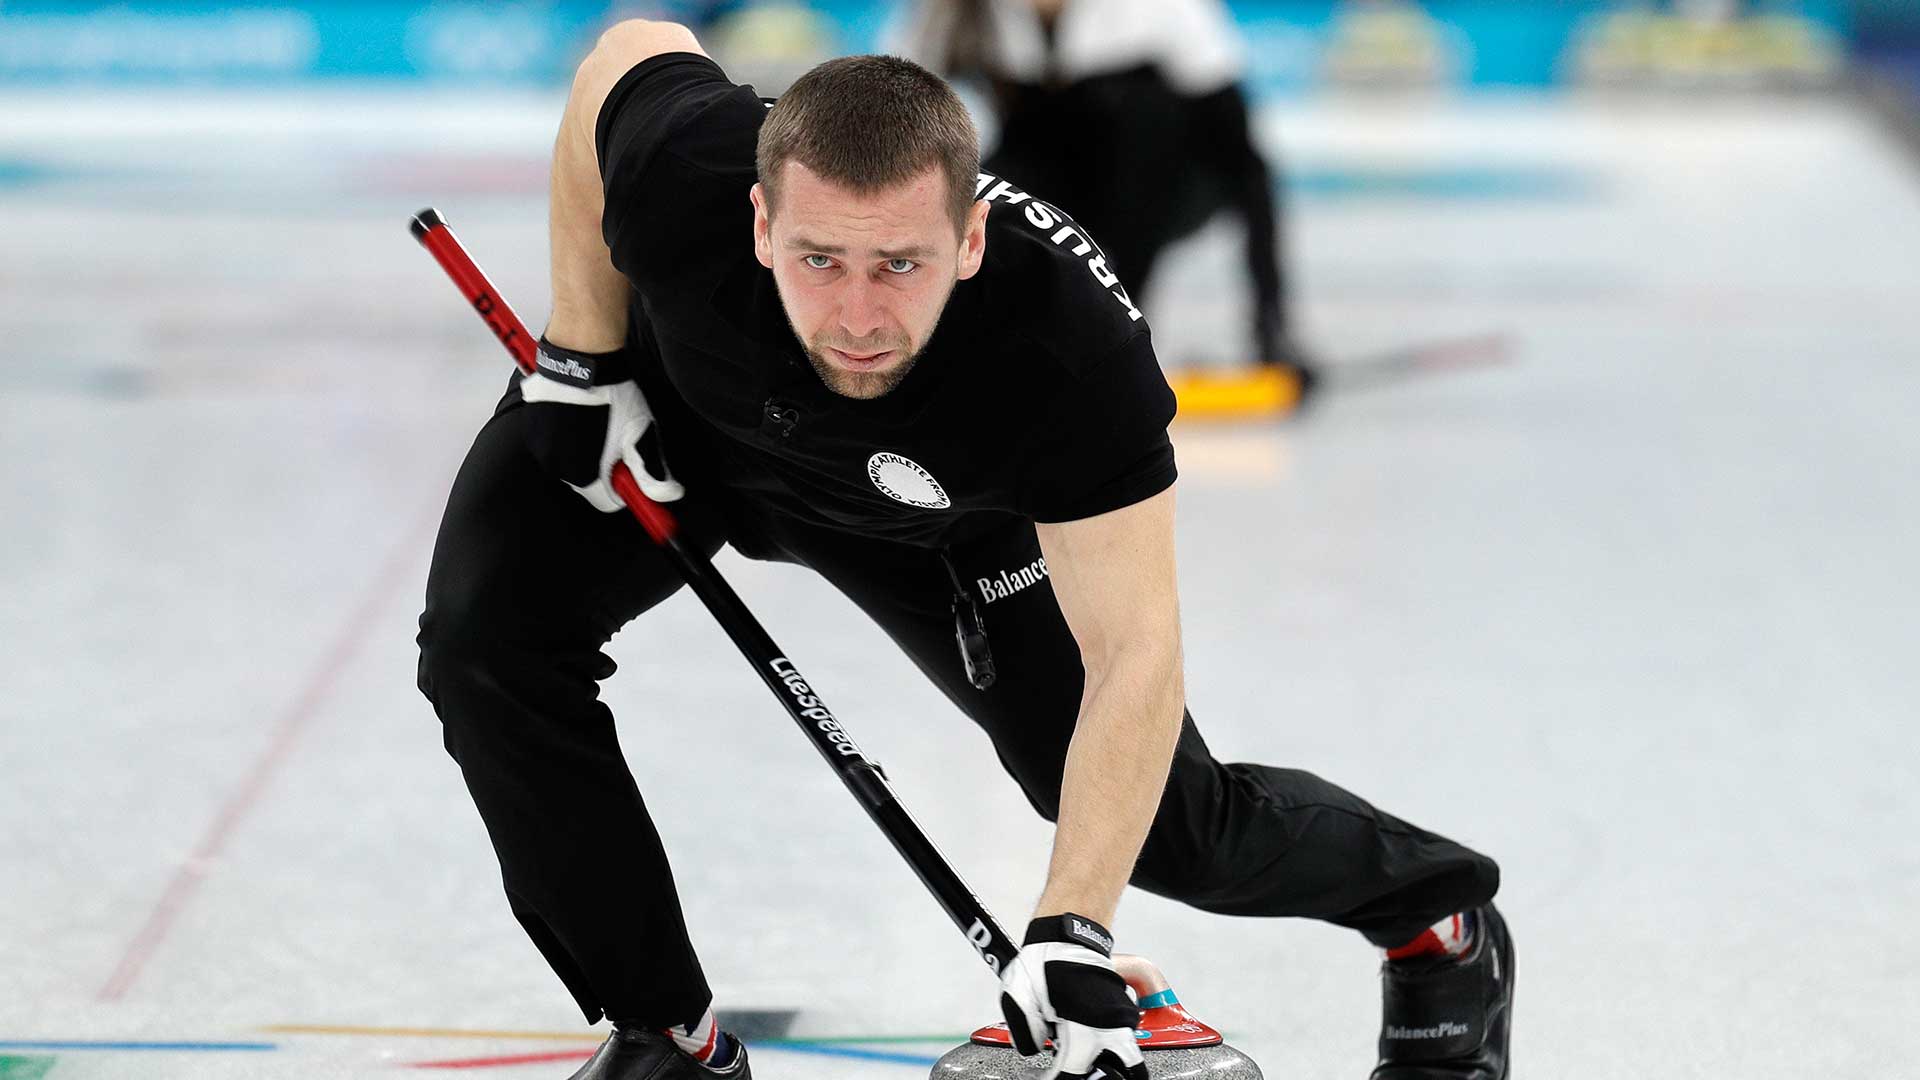 El jugador ruso de curling Alexander Krushelnitsky da positivo por dopaje